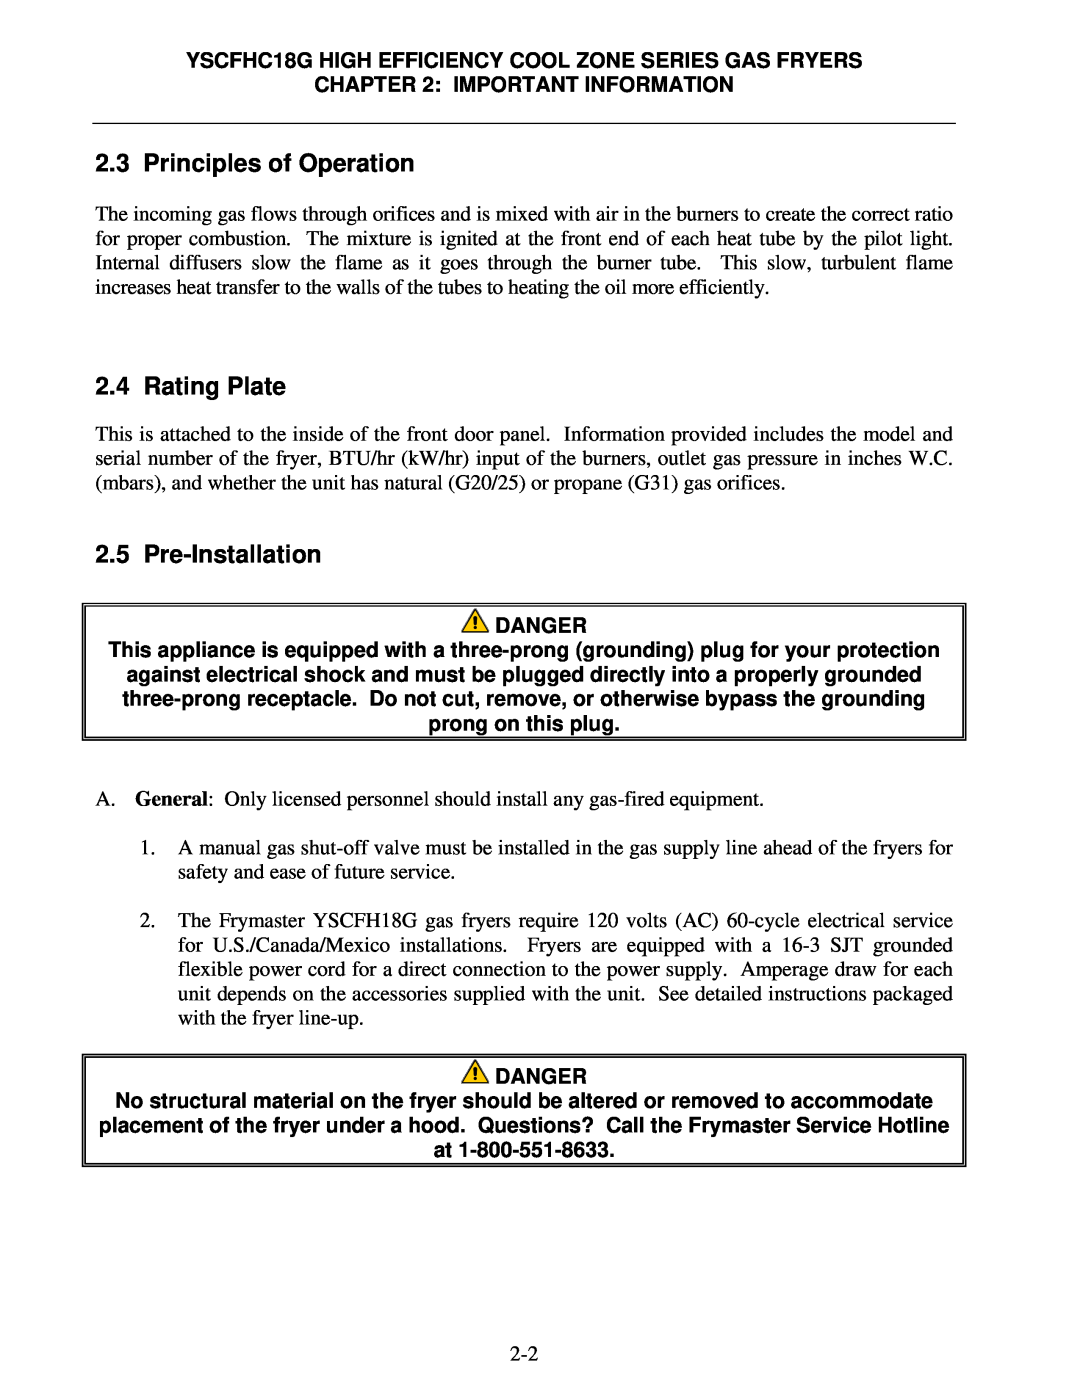 Frymaster *8196329* manual Principles of Operation, Rating Plate, Pre-Installation, Important Information, Danger 